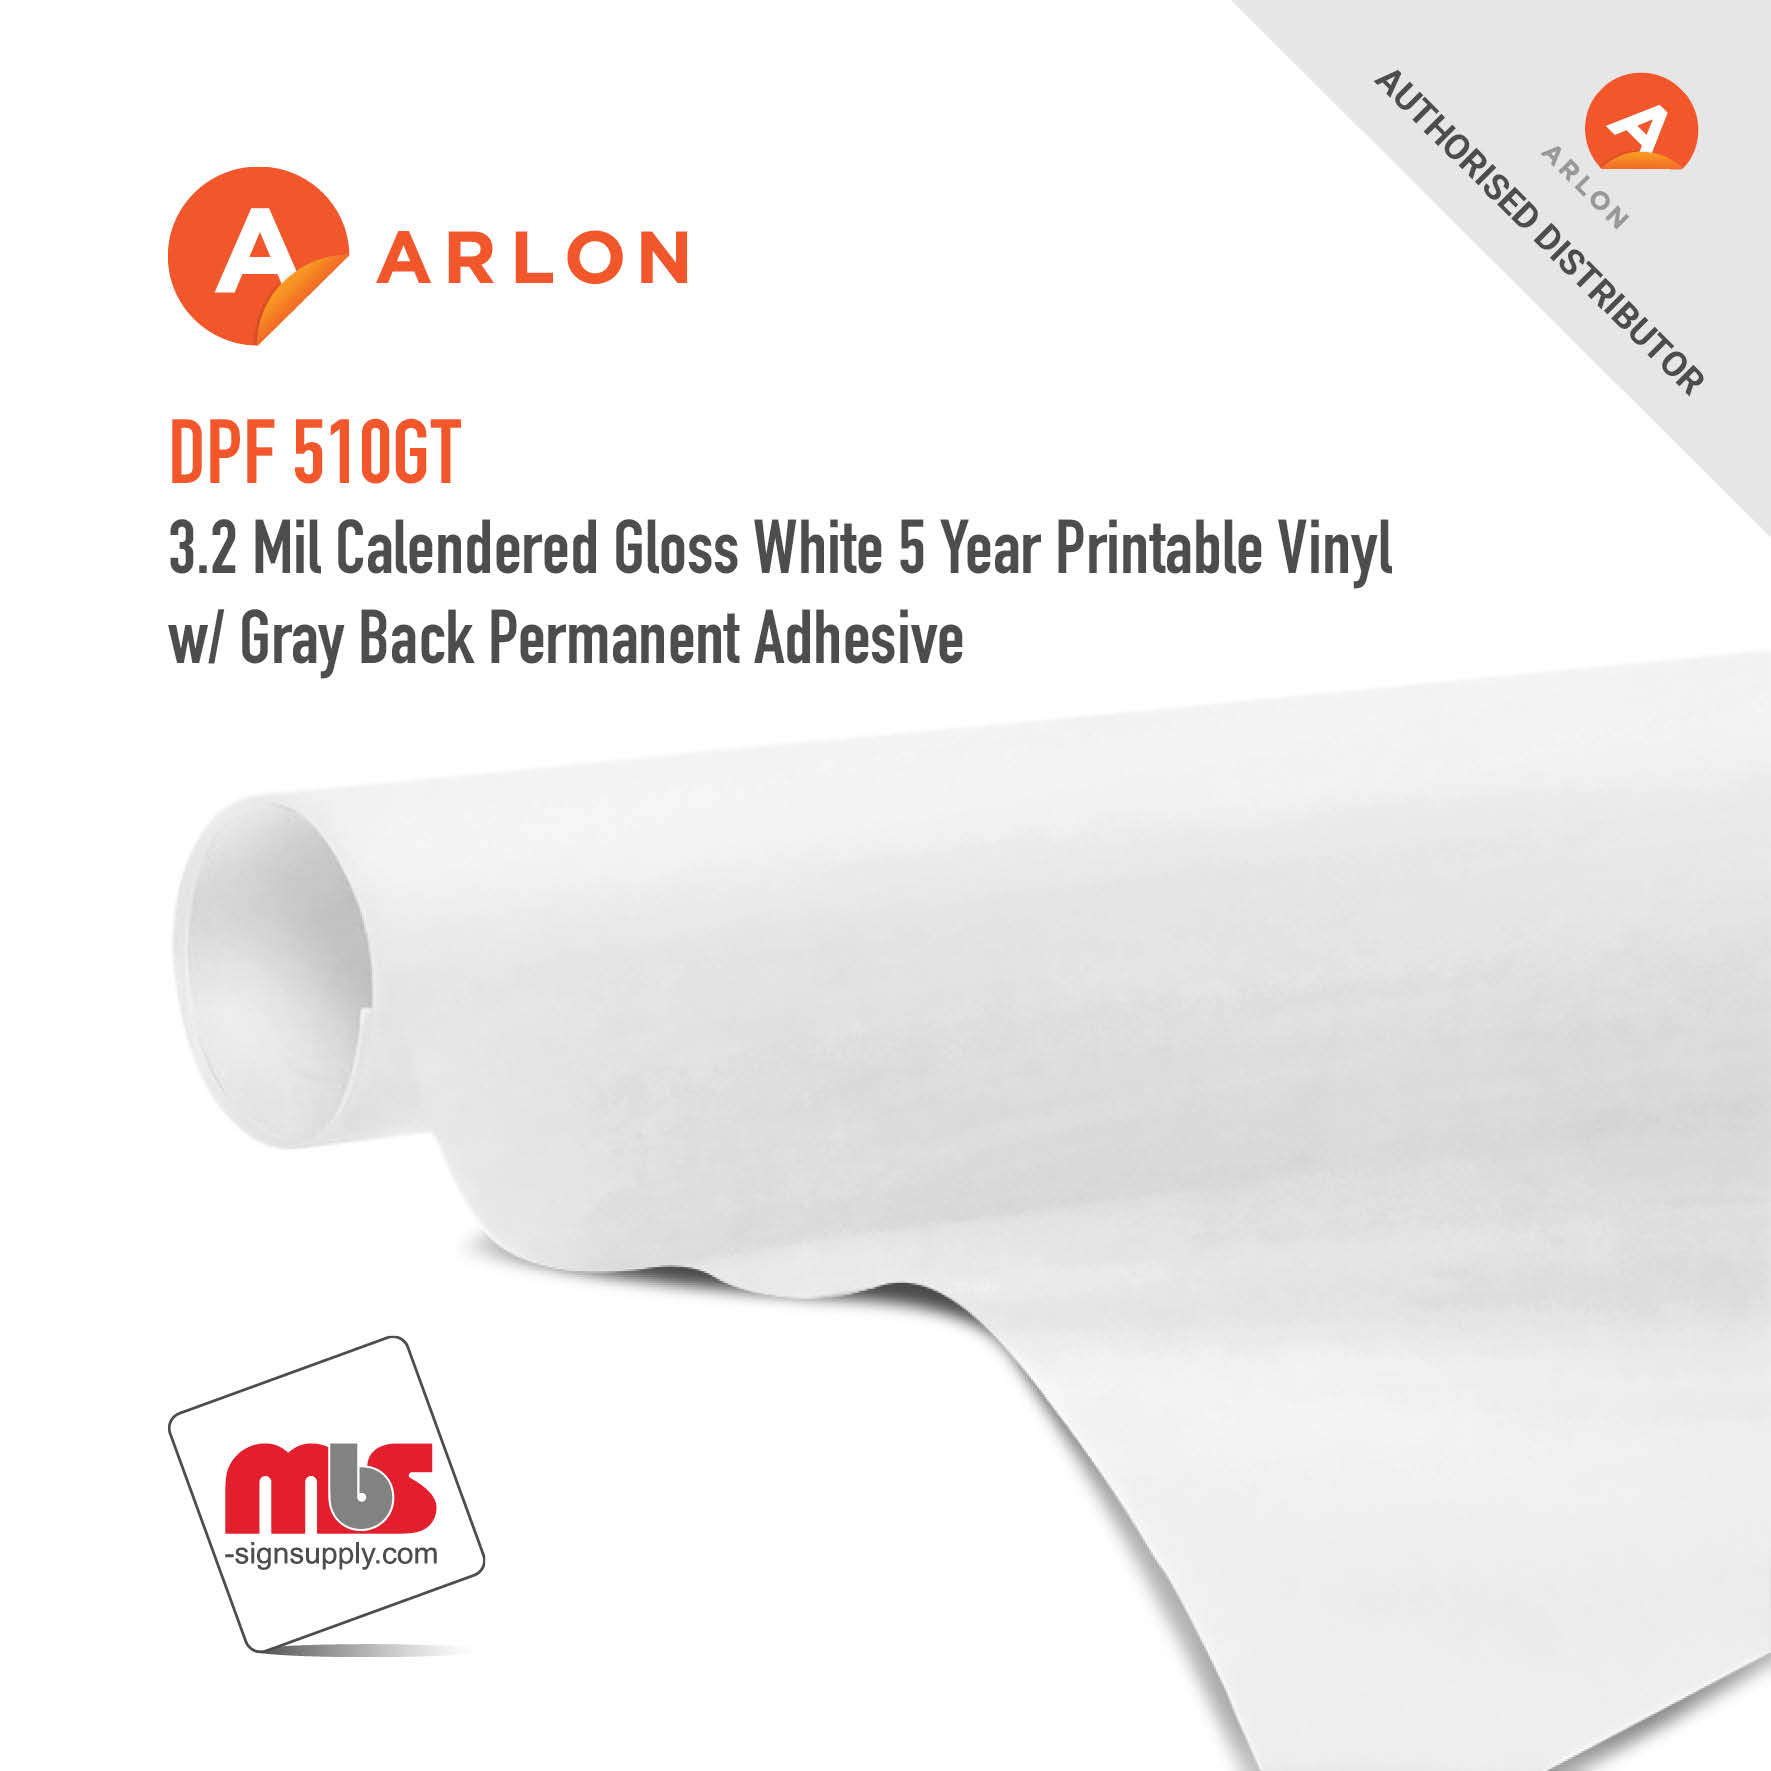 60'' x 50 Yard Roll - Arlon DPF 510GT 3.2 Mil Calendered Gloss White 5 Year Printable Vinyl w/ Gray Back Permanent Adhesive